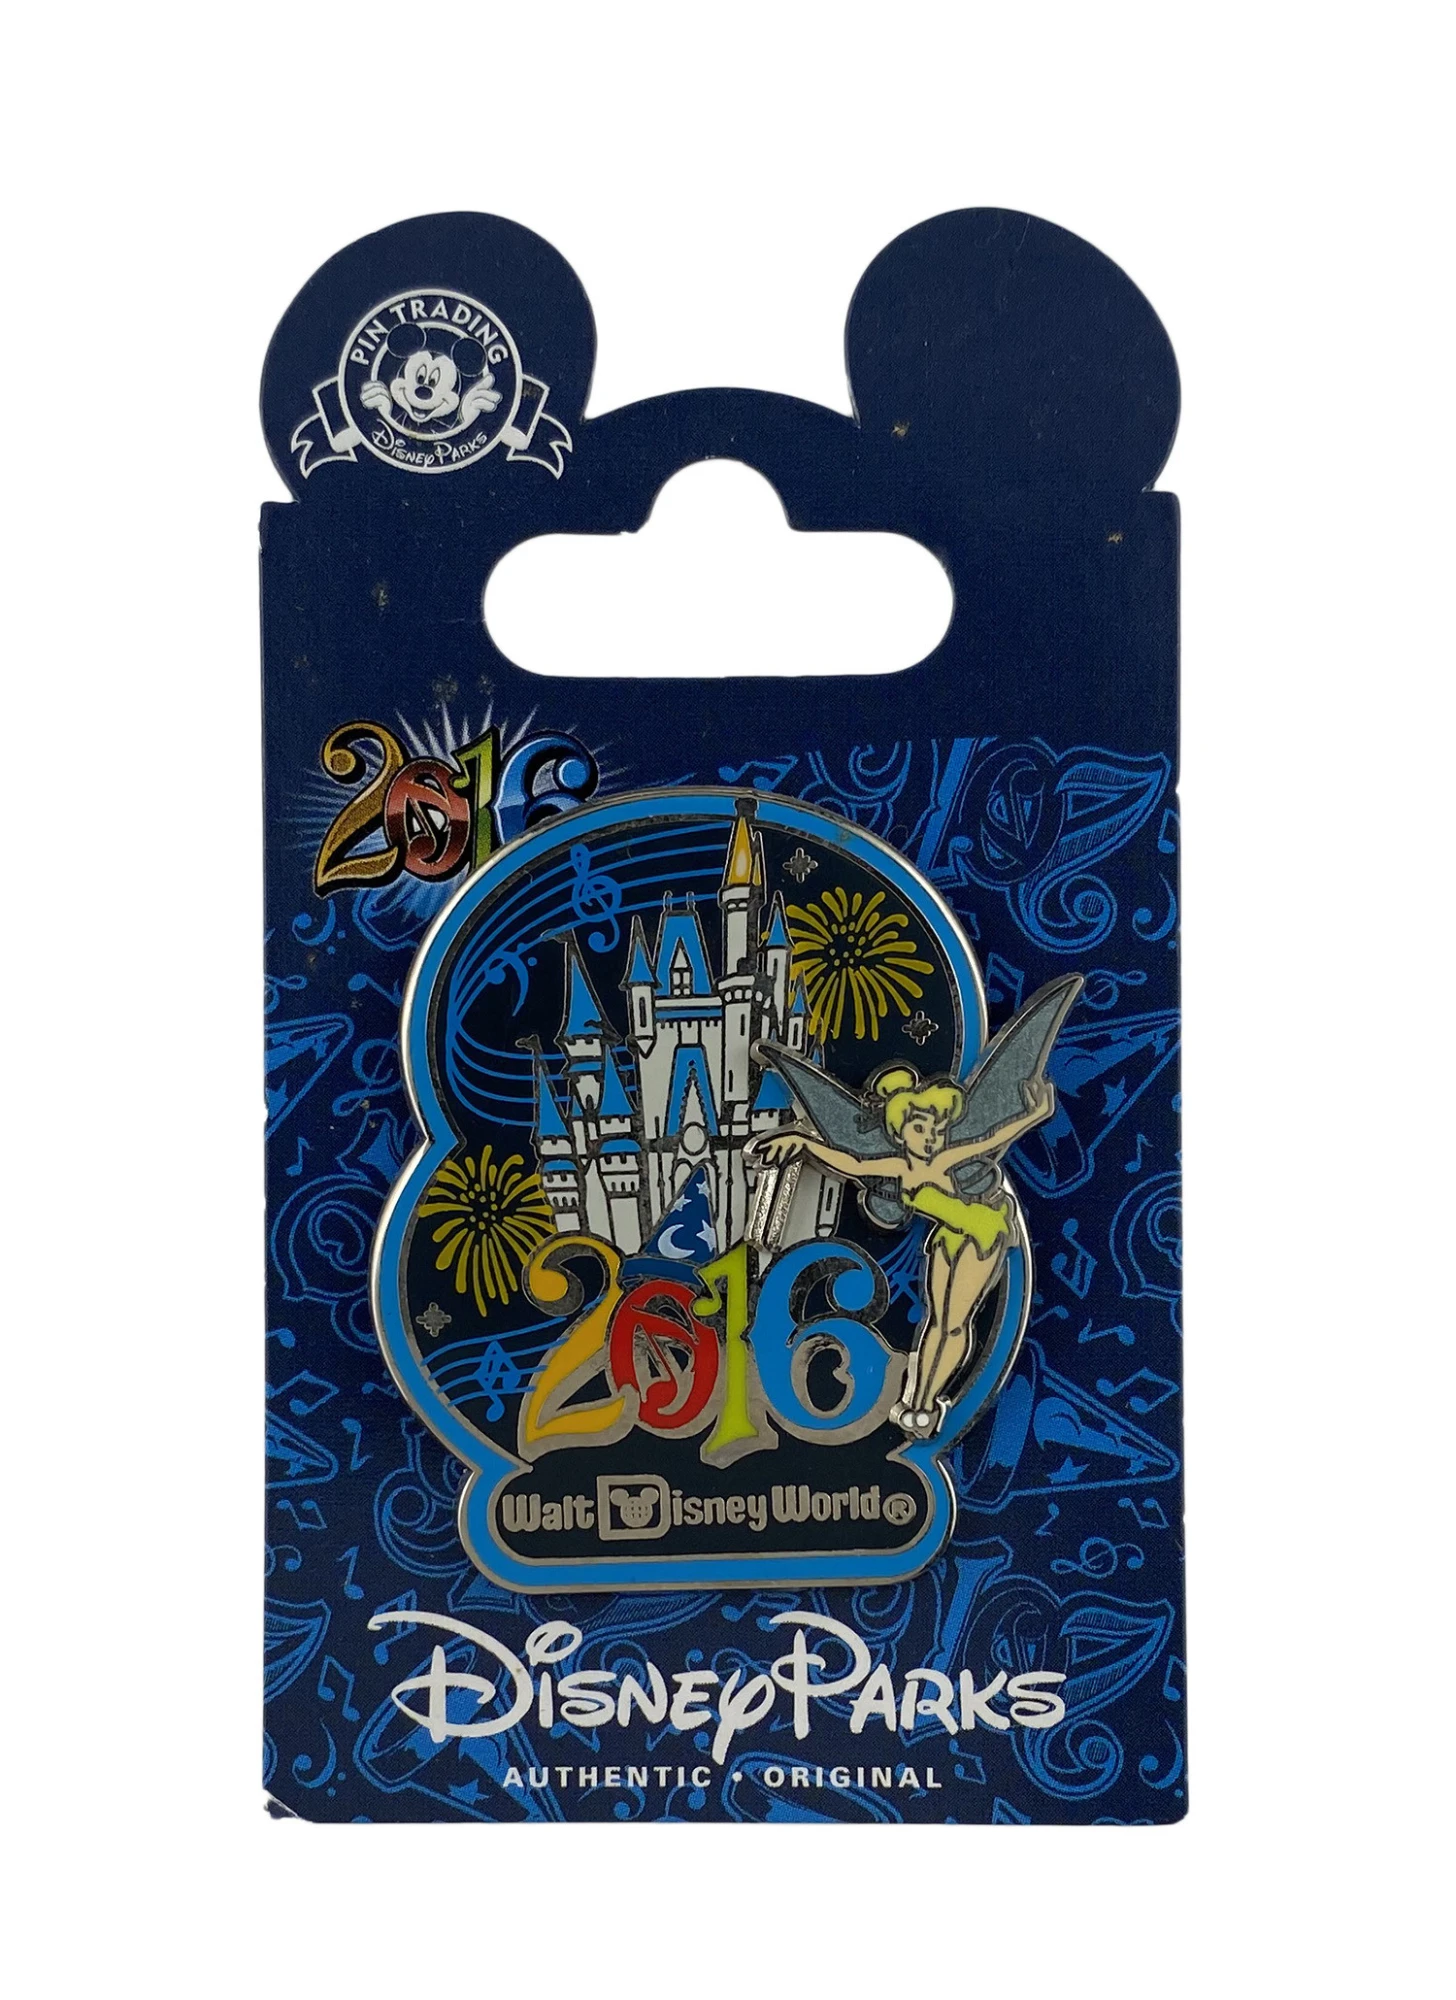 item Disney Pin - Tinker Bell 2016 113143